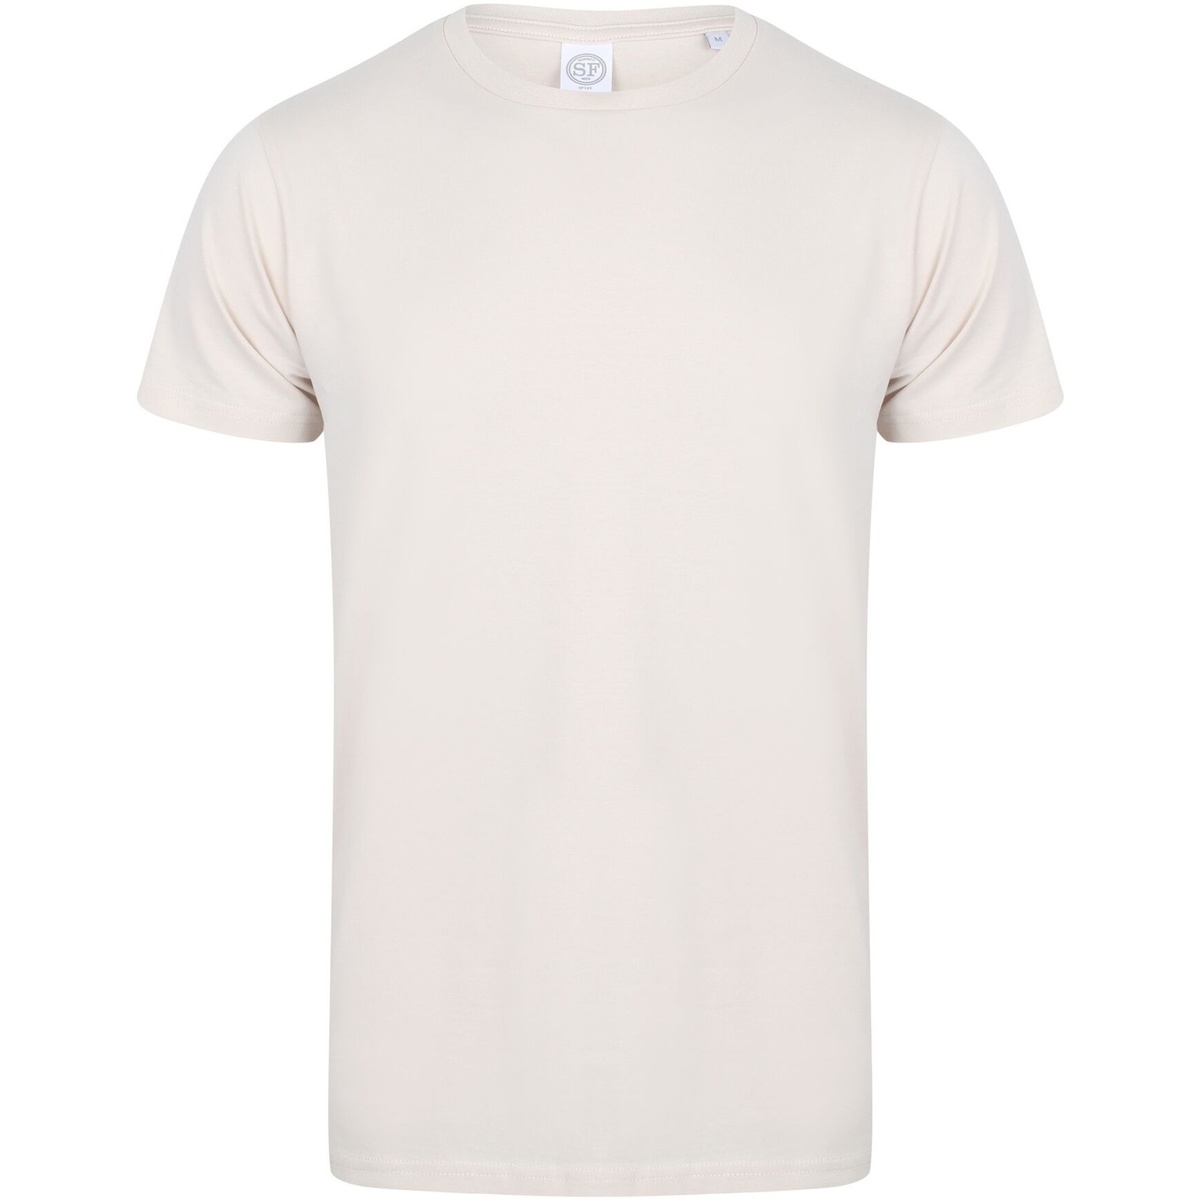 Vêtements judy T-shirts manches courtes Skinni Fit SF121 Blanc